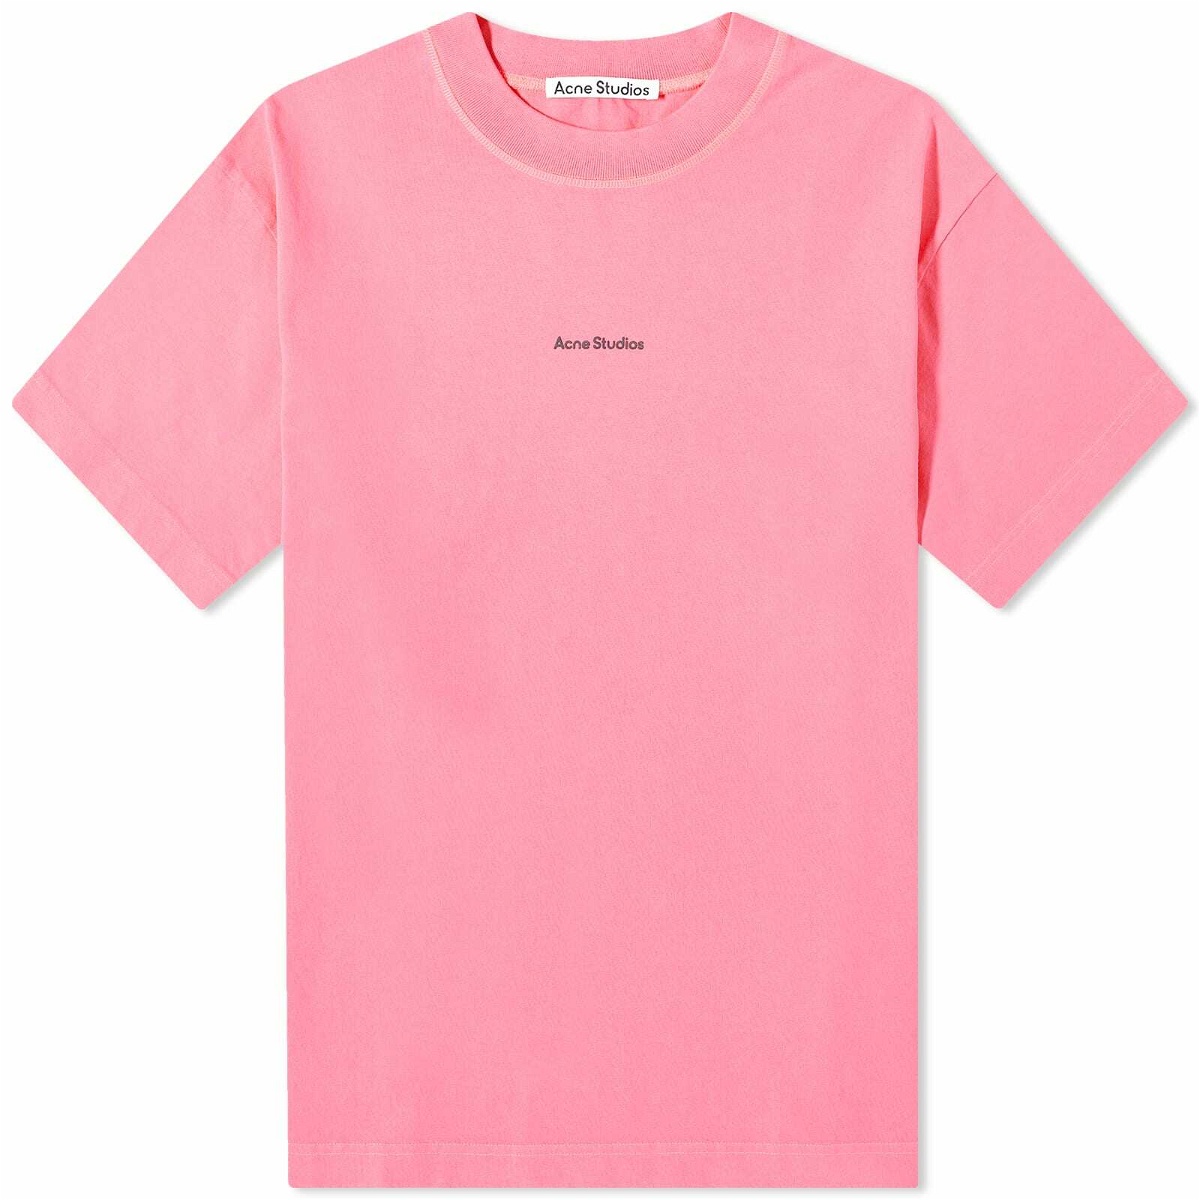 Acne Studios Men's Extorr Stamp T-Shirt in Neon Pink Acne Studios